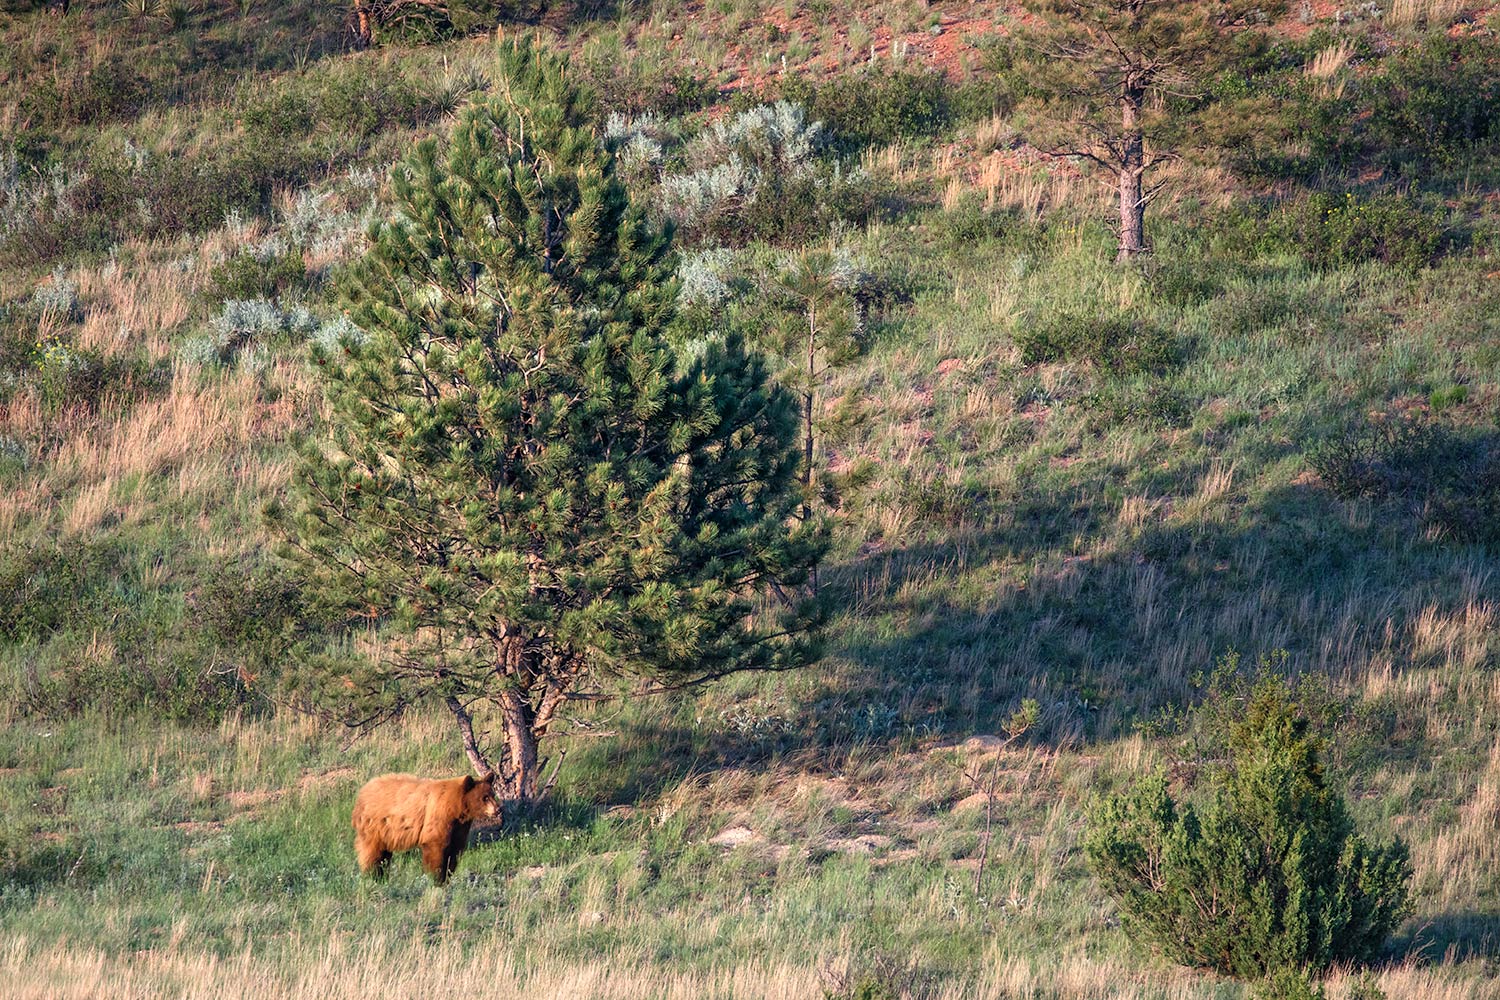 A cinnamon colored black bear on a ranch near Garland, Montana.